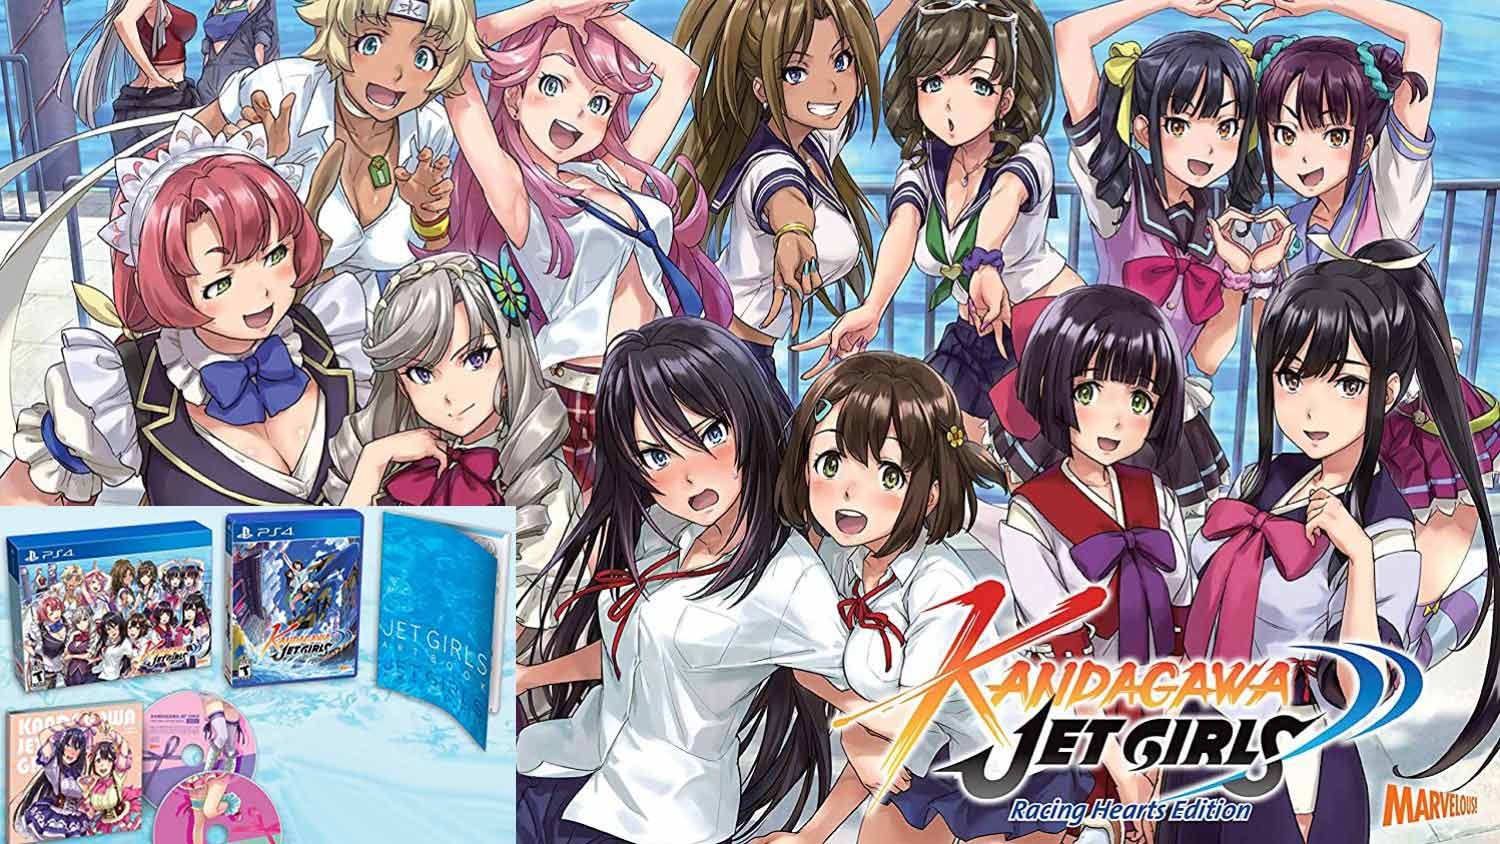 Kandagawa Jet Girls Racing Hearts Edition